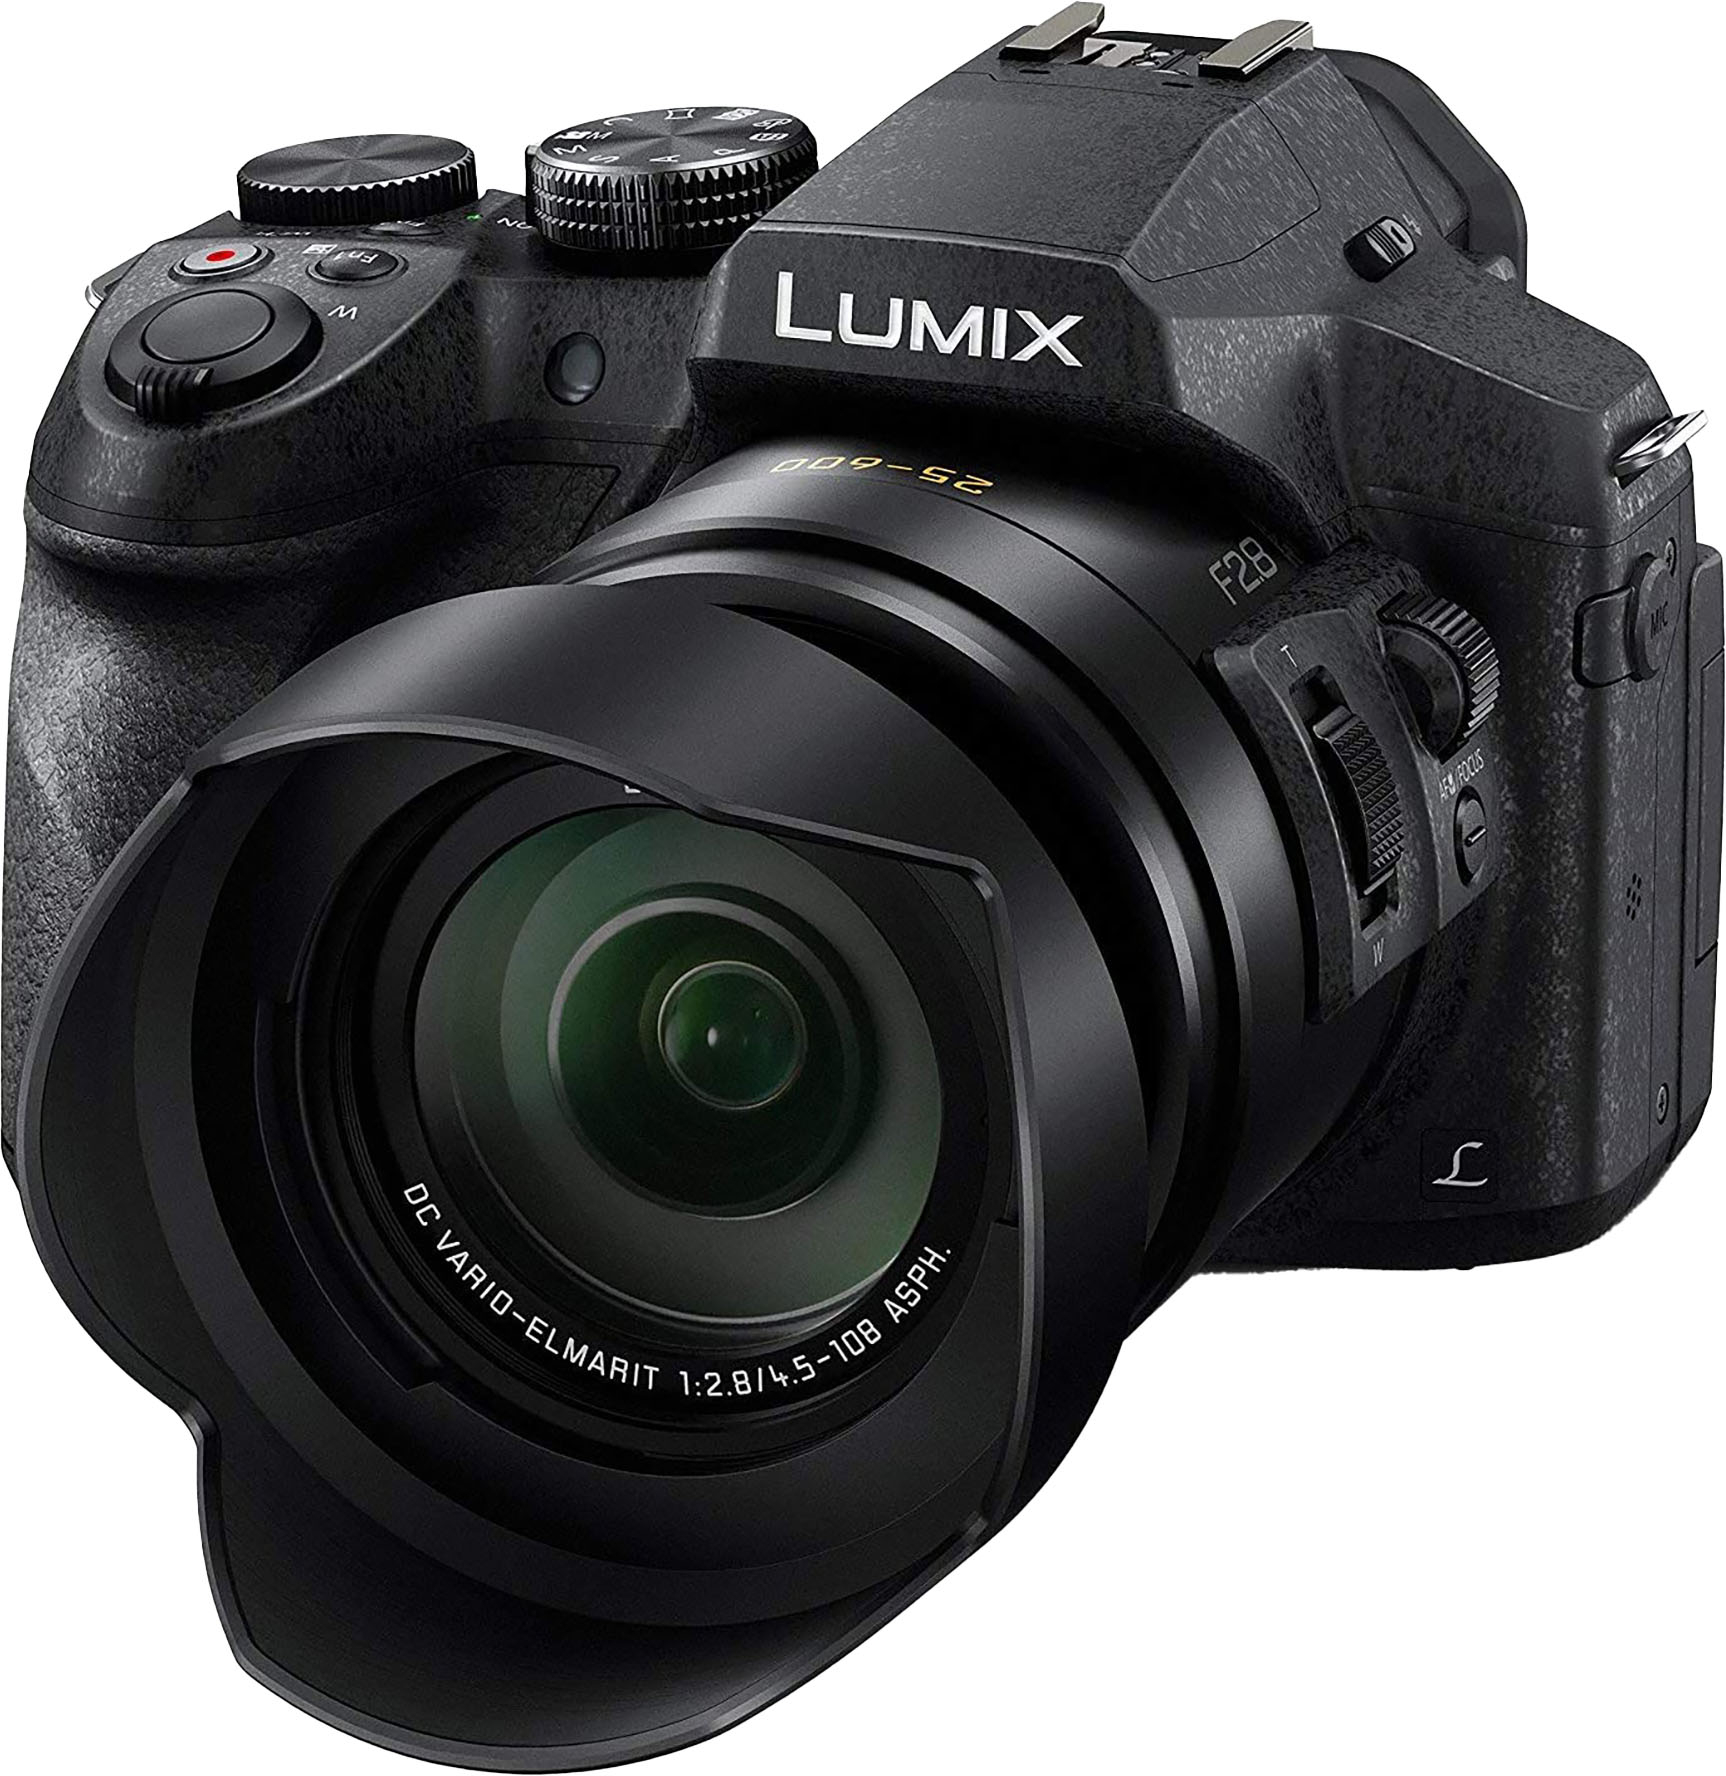 Angle View: Panasonic - LUMIX FZ300 1/2.3-inch 12.1-Megapixel Sensor Point and Shoot Digital Camera with LEICA DC 24X F2.8 Zoom Lens - Black